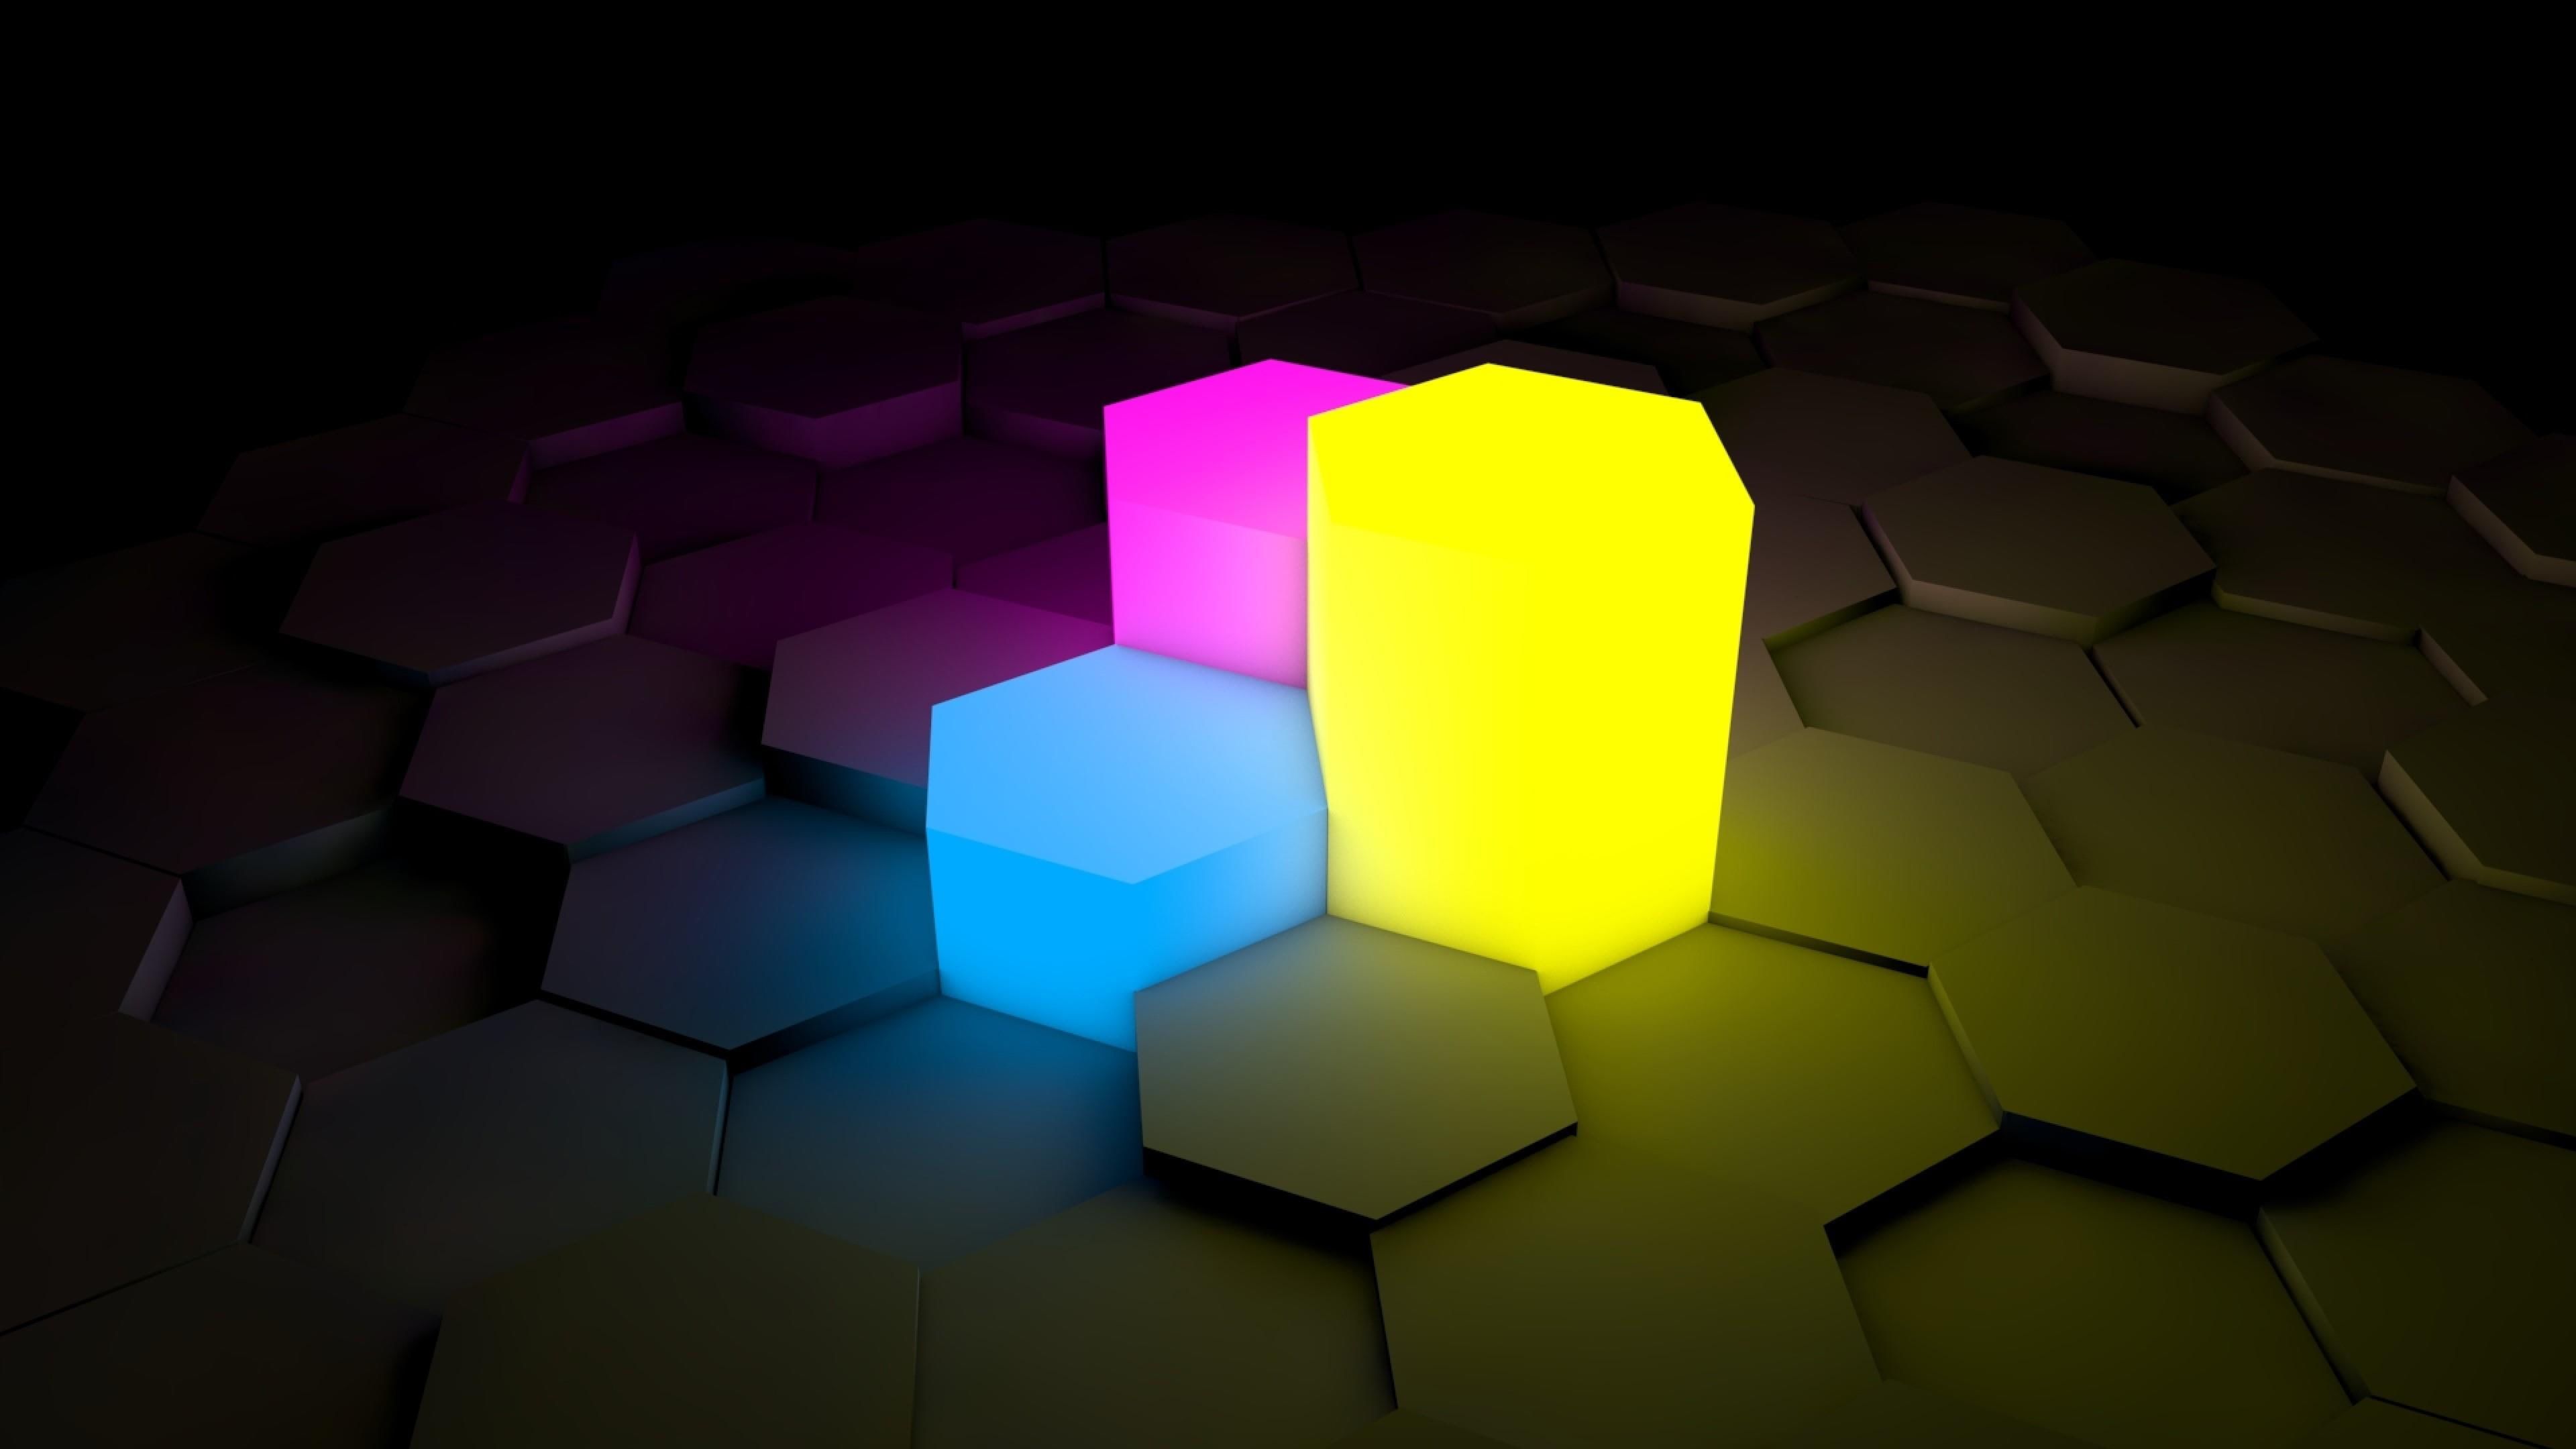 3D #blocks #blue #pink #yellow #dark #abstract #hexagon #shining #shadow #focus #neon K #wallpaper #hdwa. Hexagon wallpaper, Neon wallpaper, Abstract wallpaper